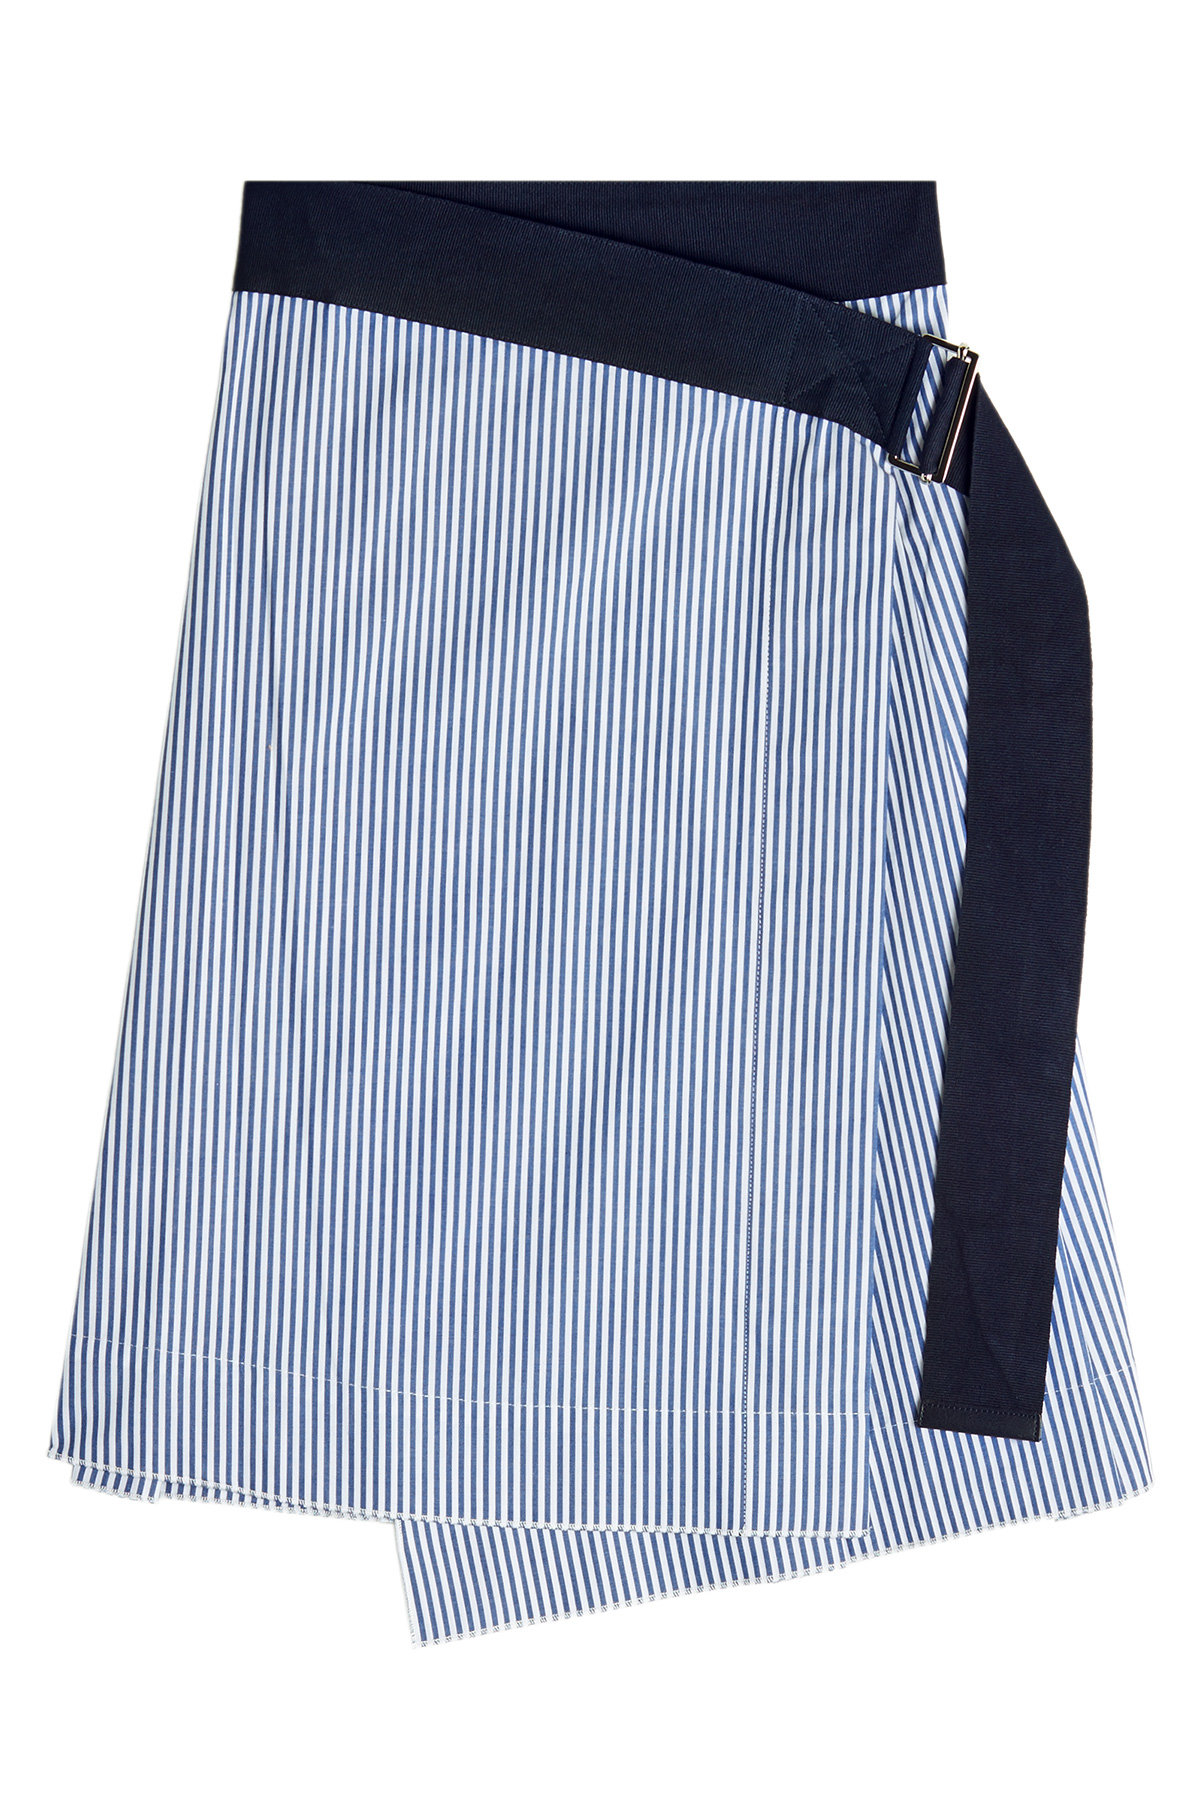 Steffen Schraut - Asymmetric Striped Cotton Skirt